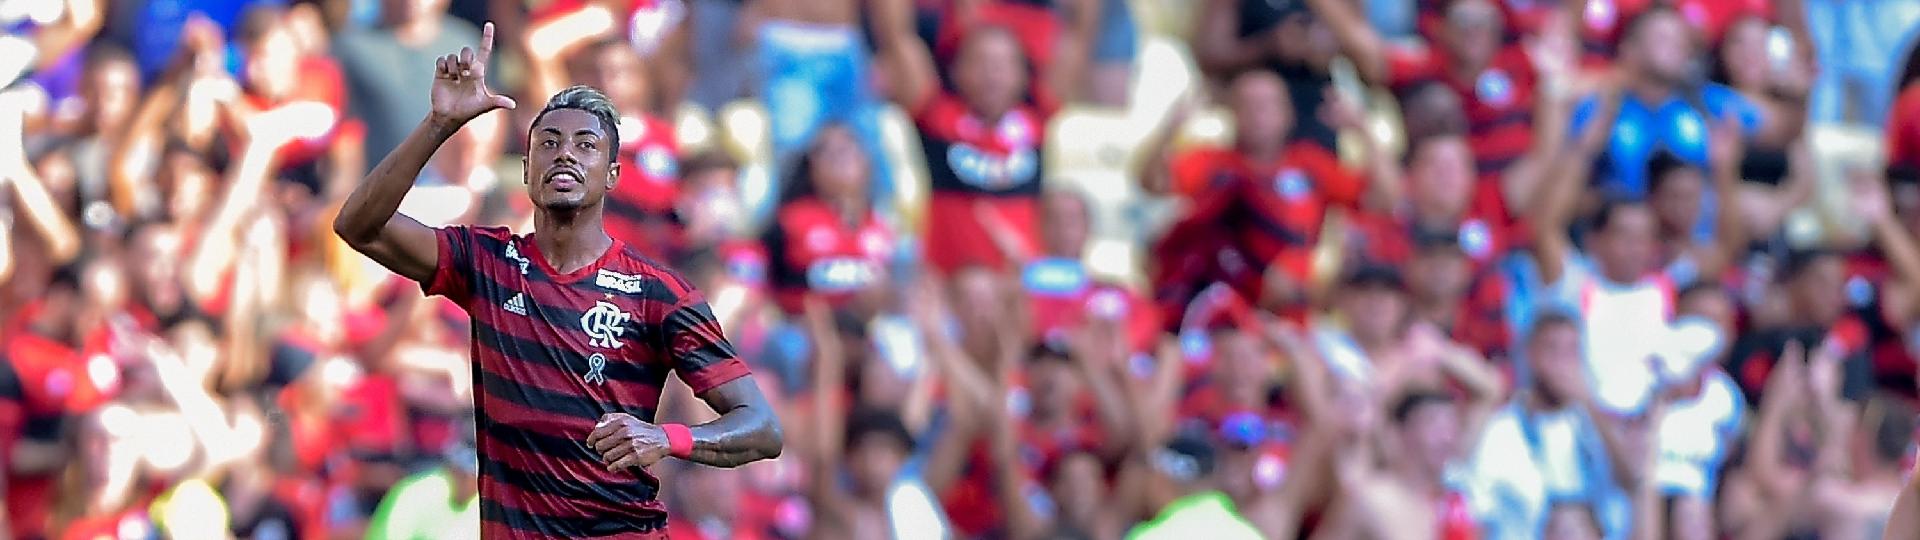 Bruno Henrique comemora gol do Flamengo contra o Fluminense